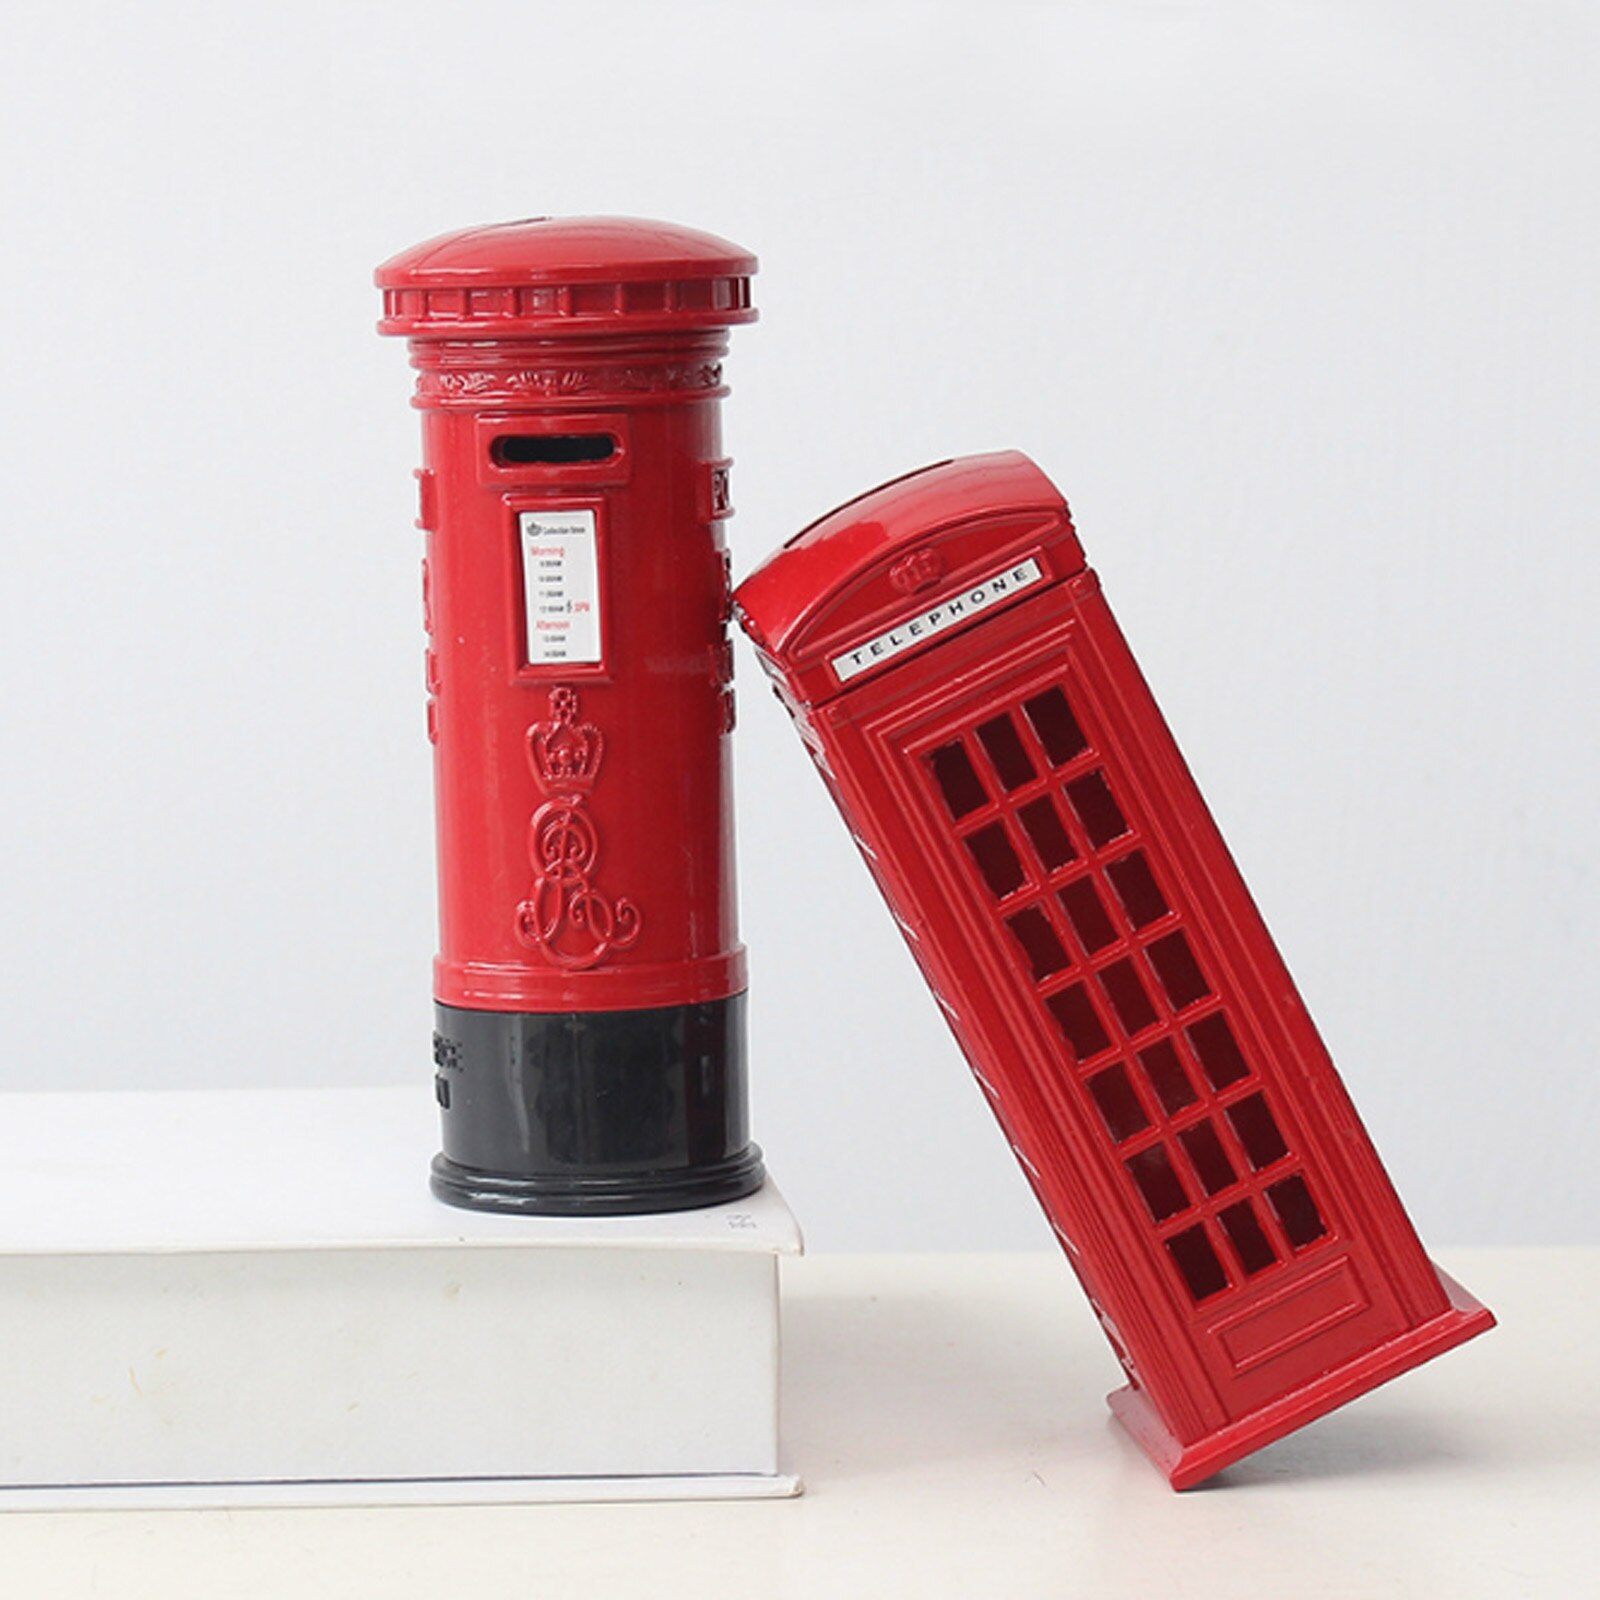 Legering Engels London Telefooncel Bank Coin Bank Saving Pot Spaarpot Rode Telefooncel Box